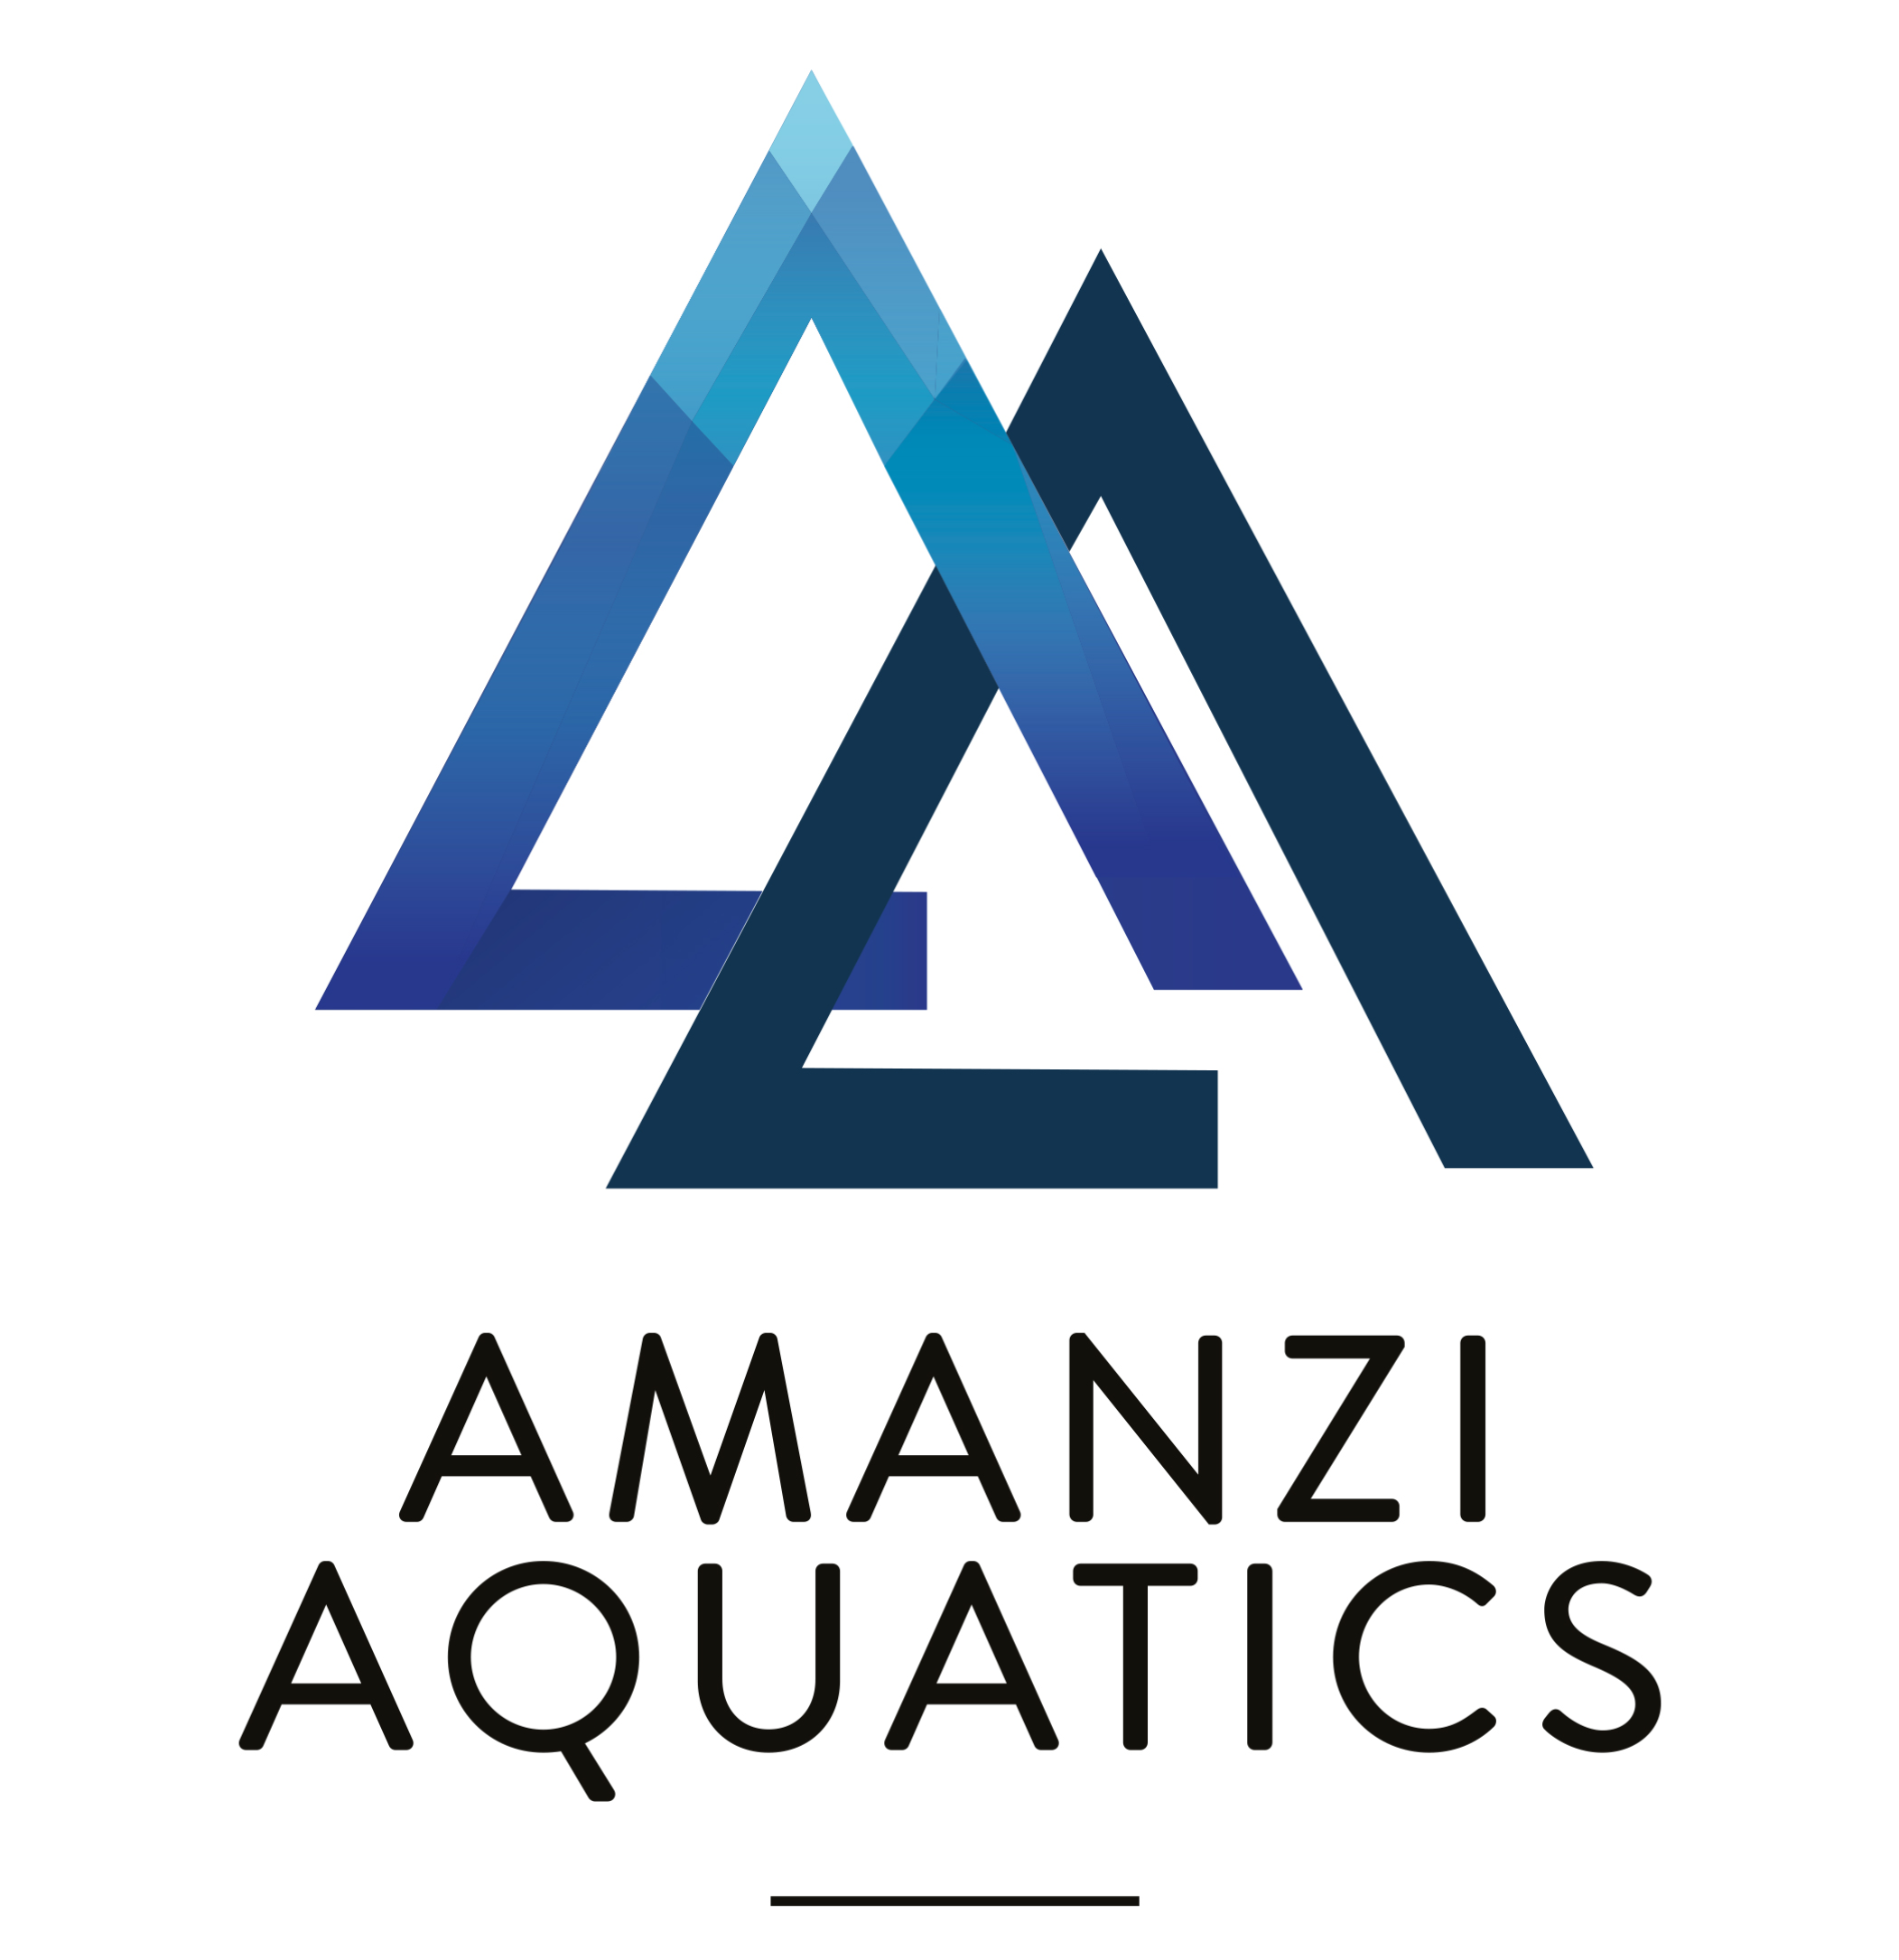 Amanzi Aquatics (Pty) Ltd